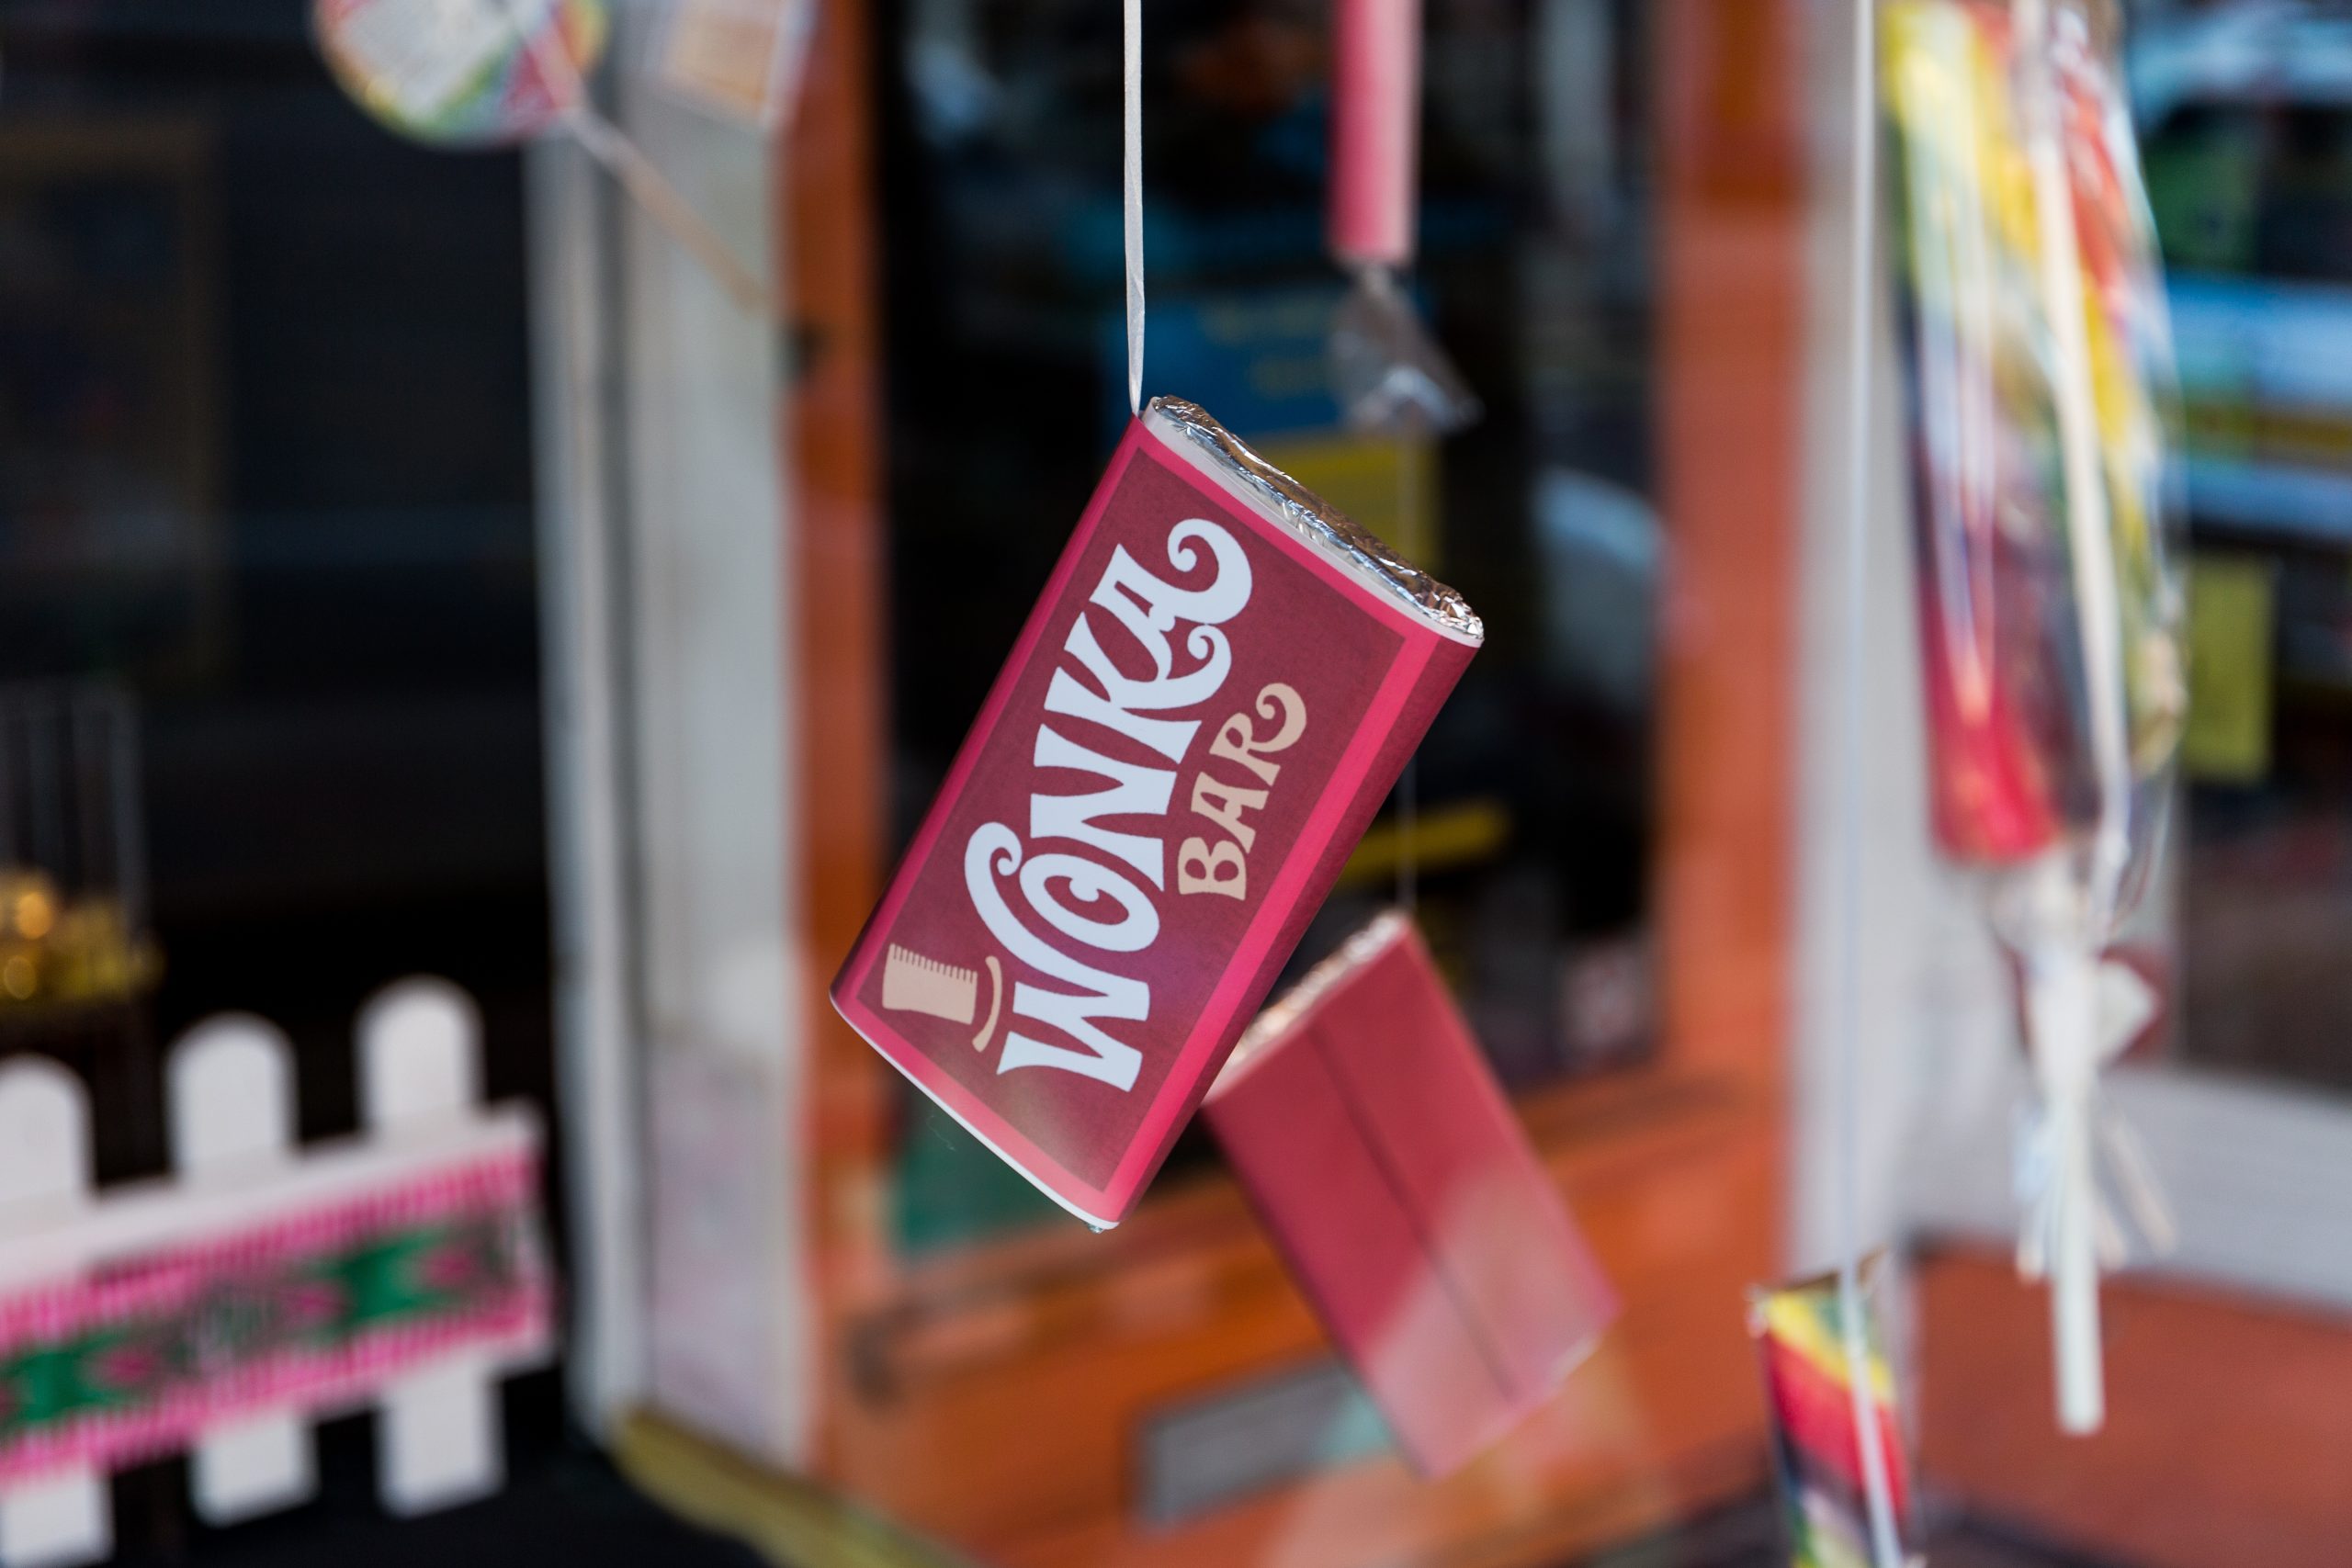 Fake Wonka chocolate bars among £100,000 worth of counterfeit